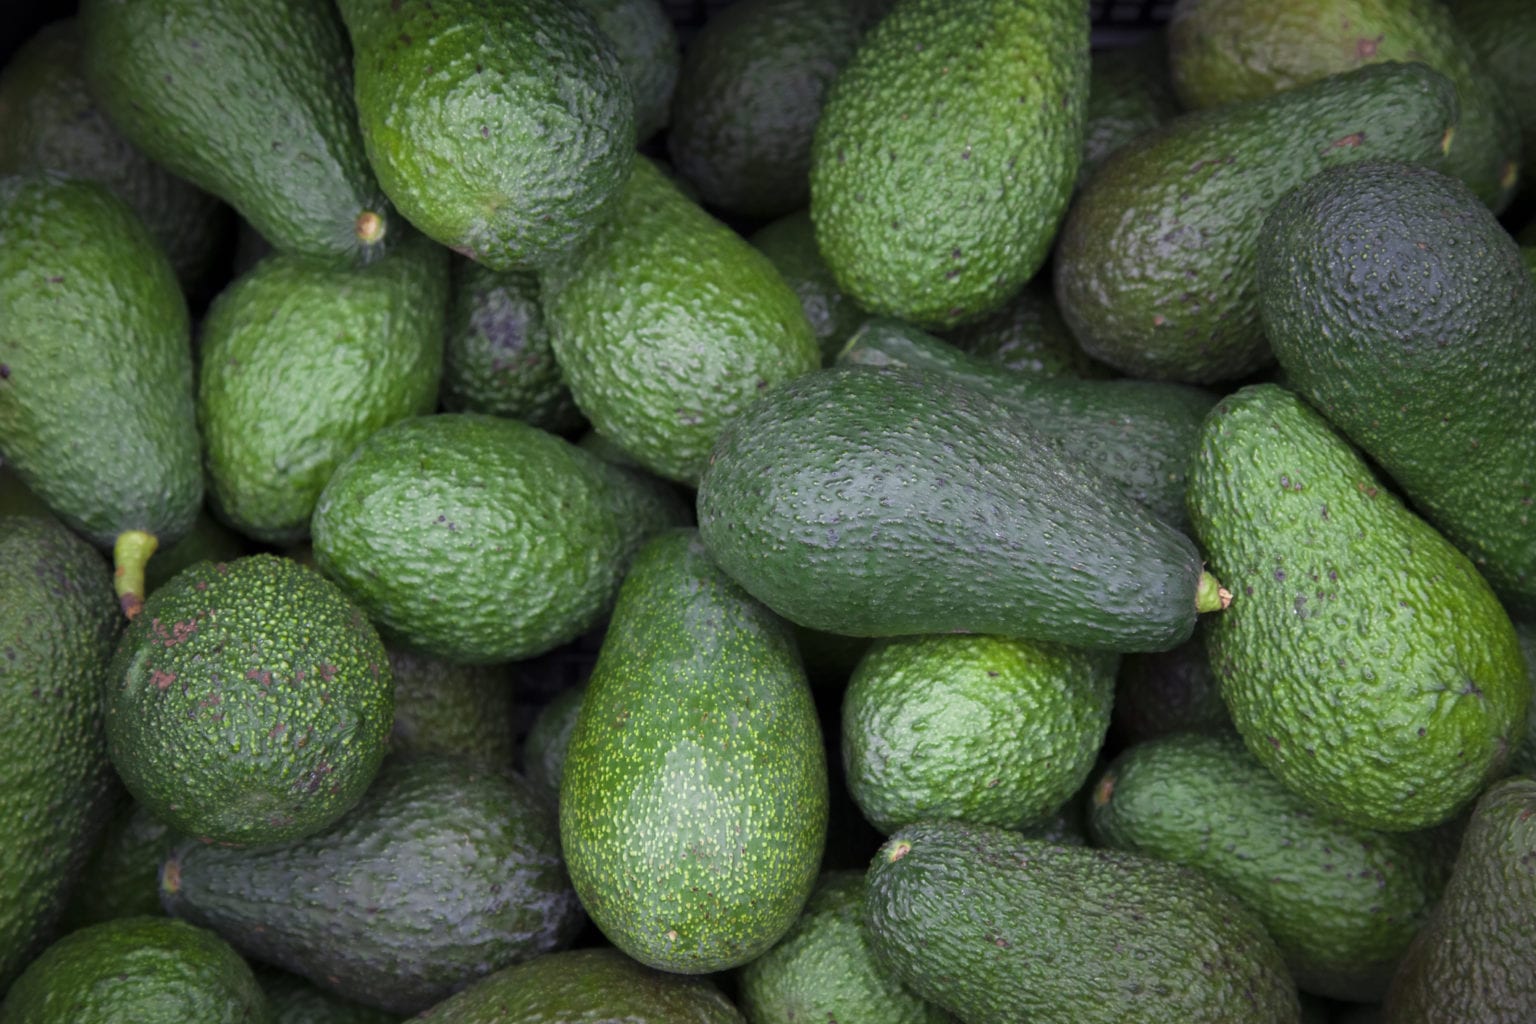 Hawaiian avocados are coming back!